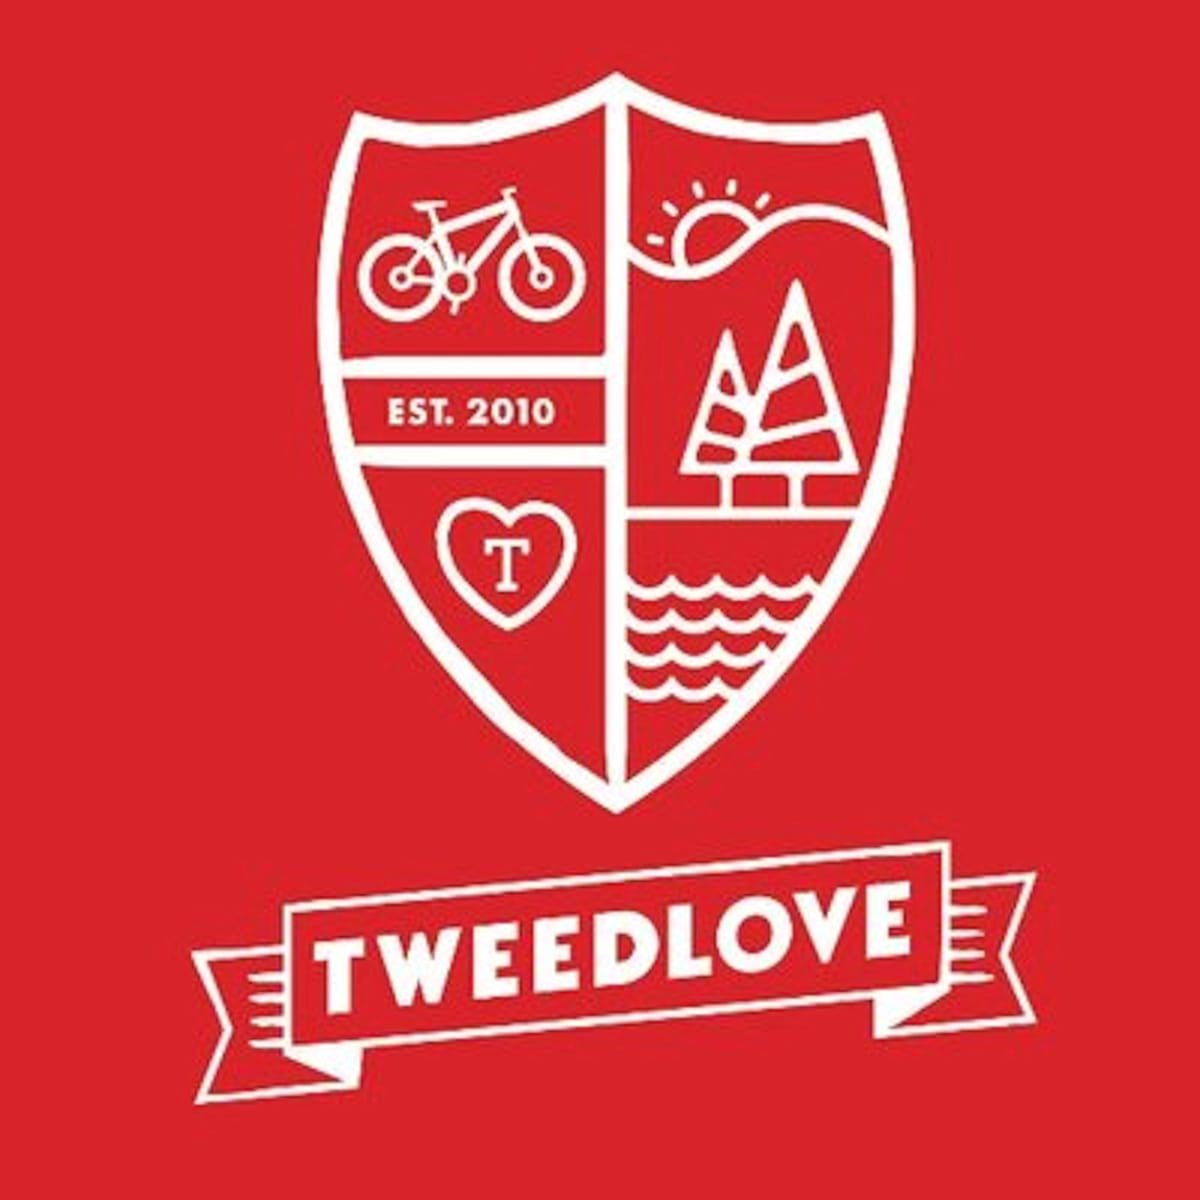 tweedlove logo singletrack partner advertiser